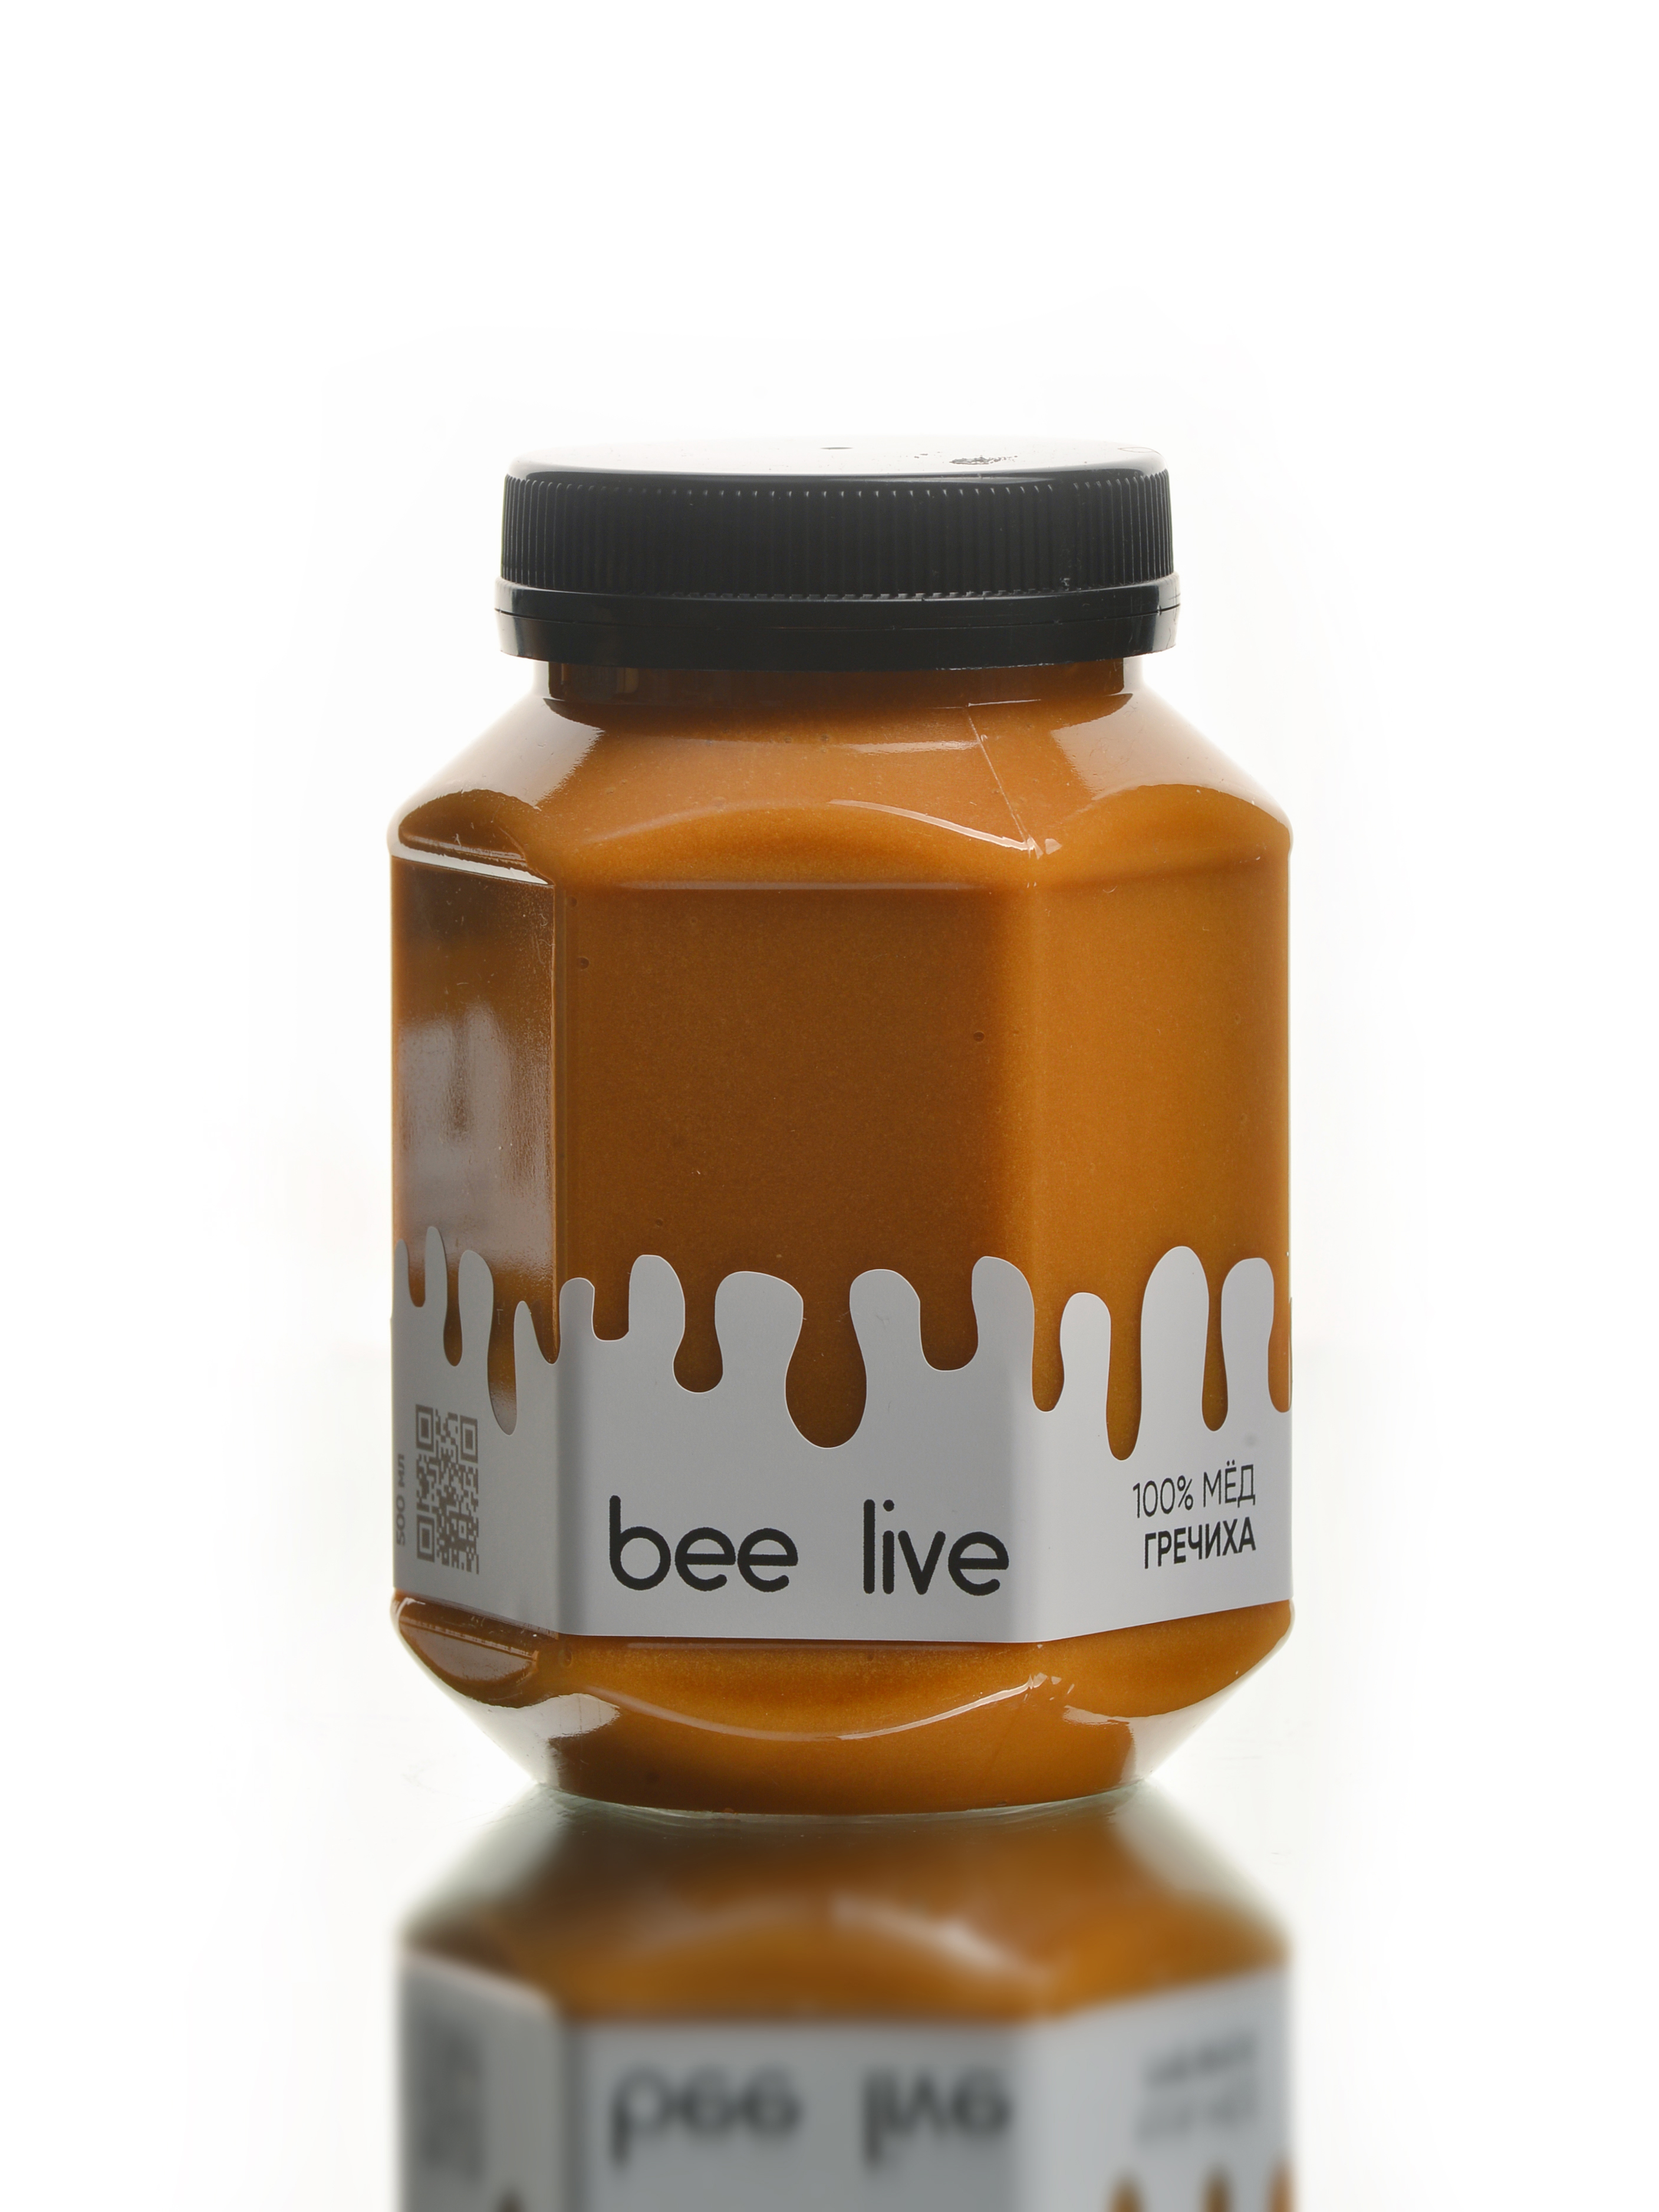 Гречишный мёд Bee live алтайский, 700 г